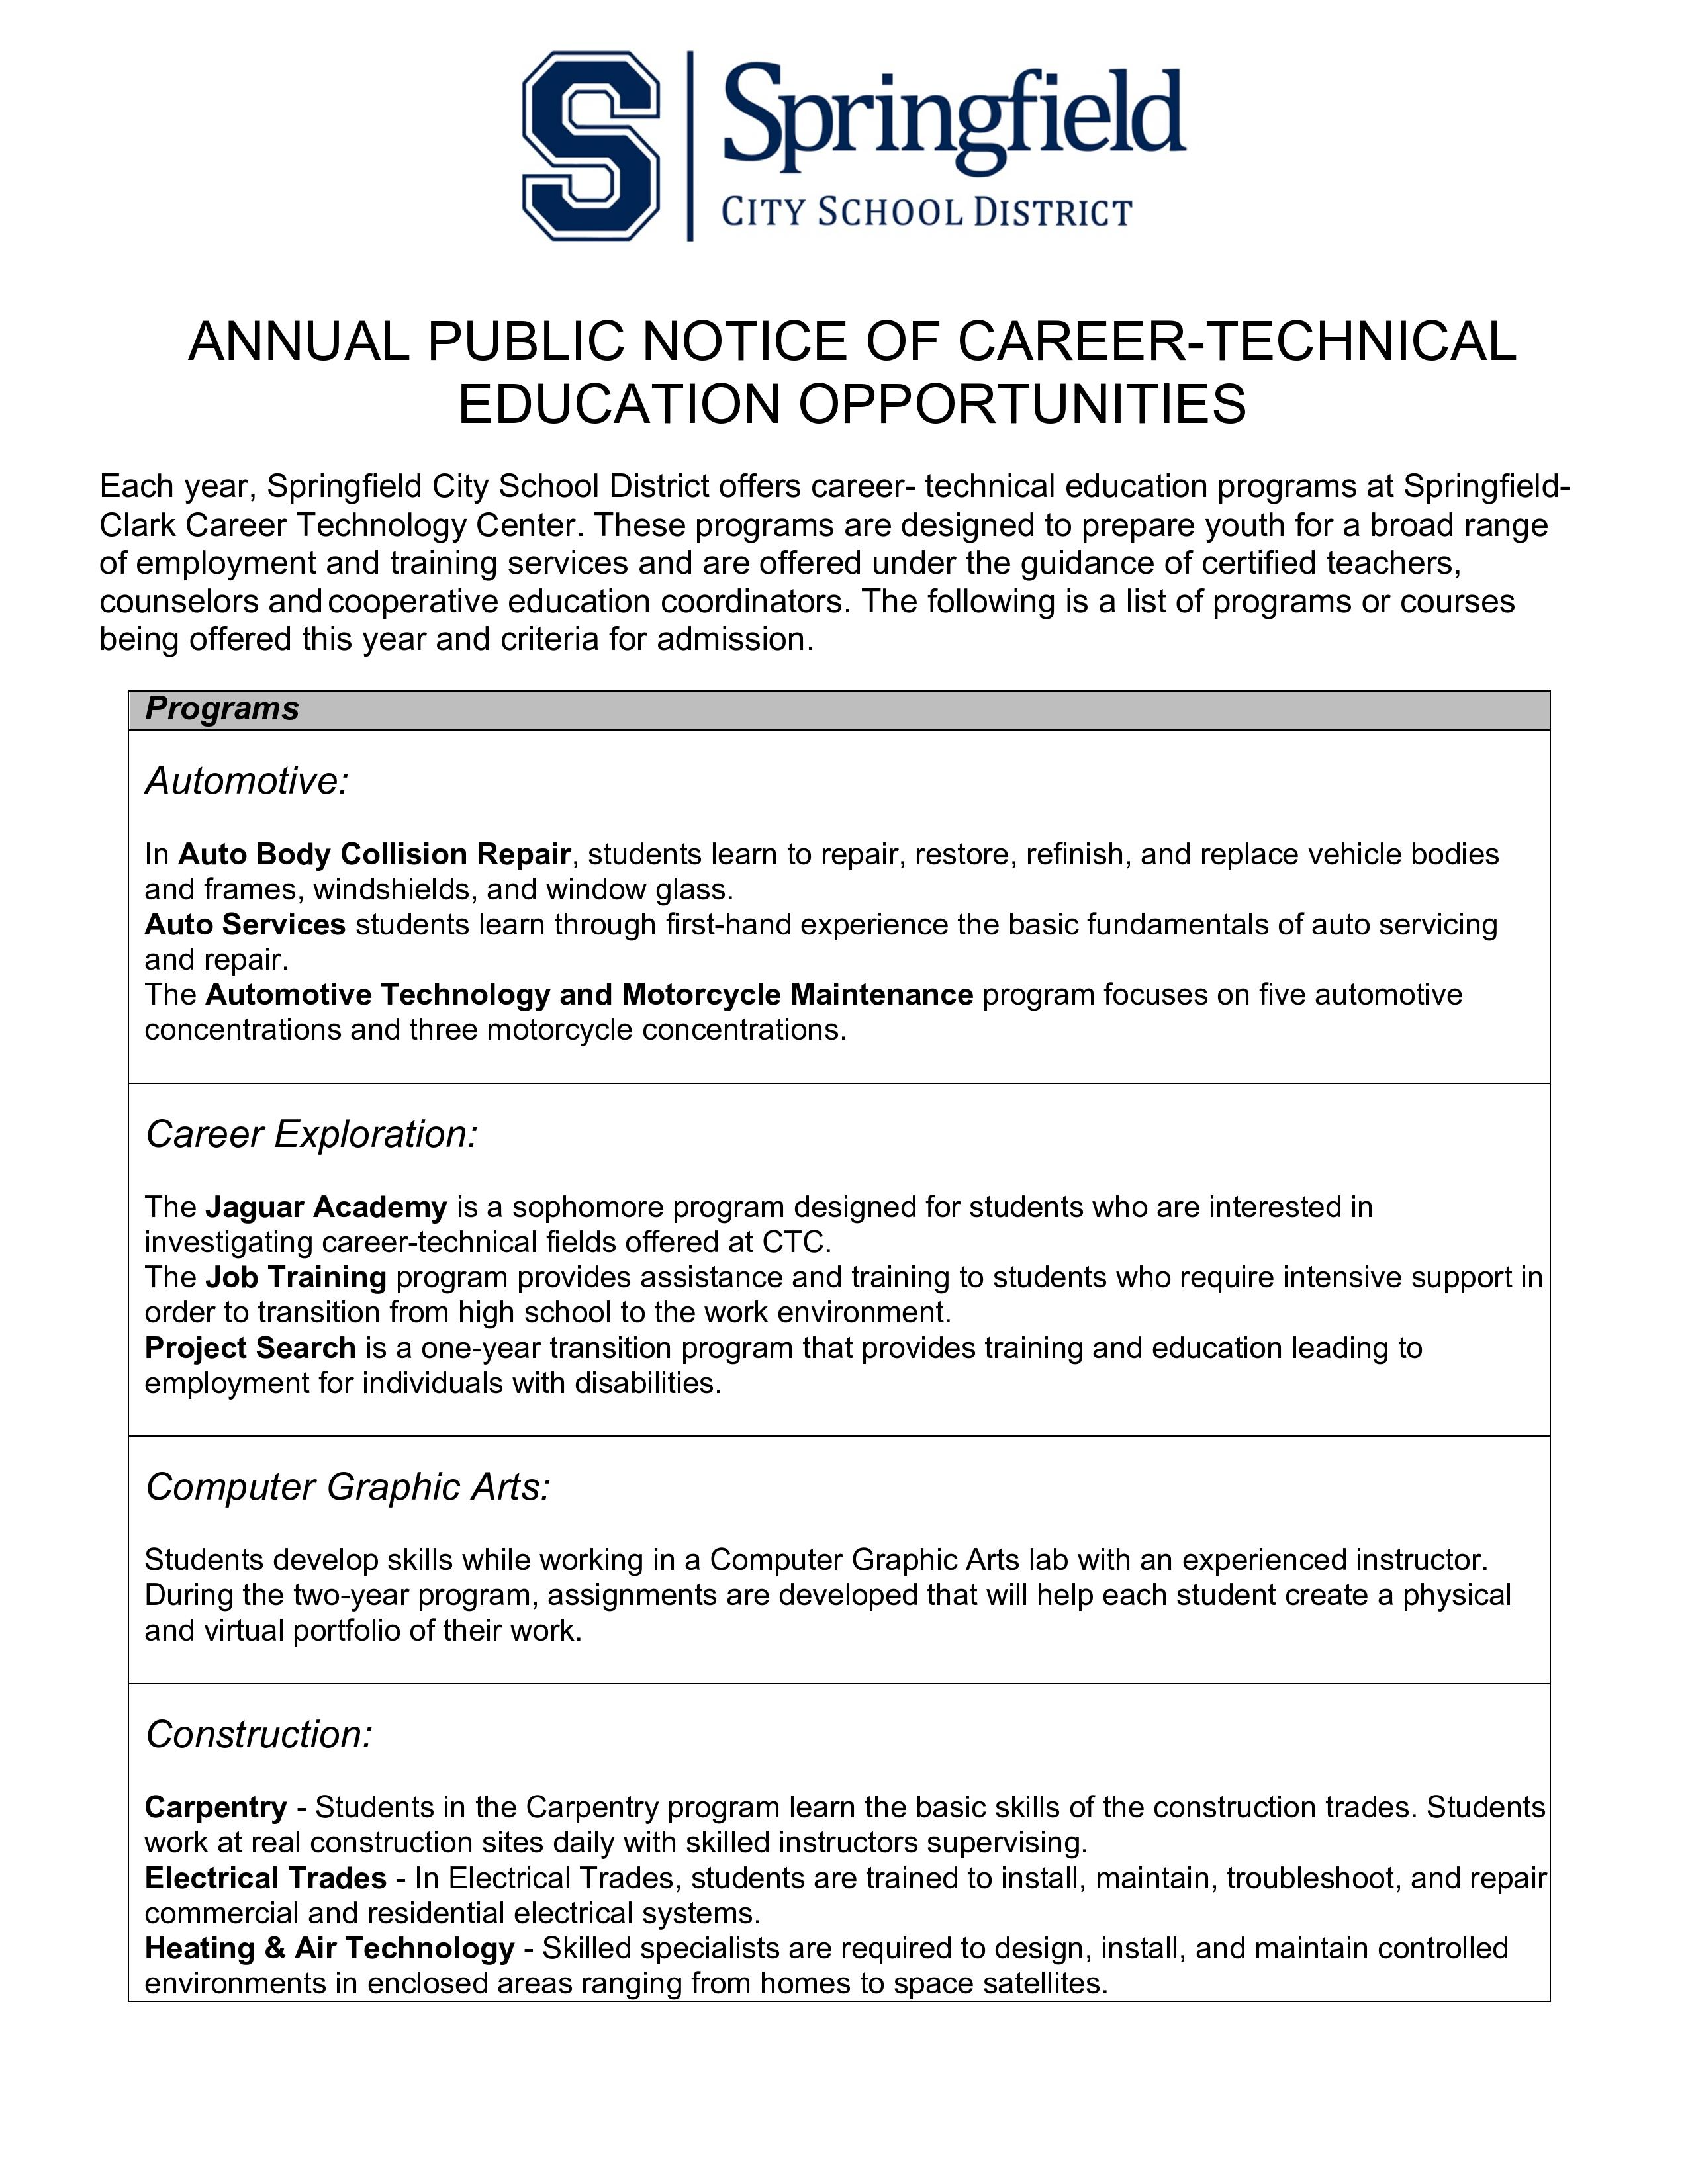 Springfield Clark CTC Program Public Notice Document